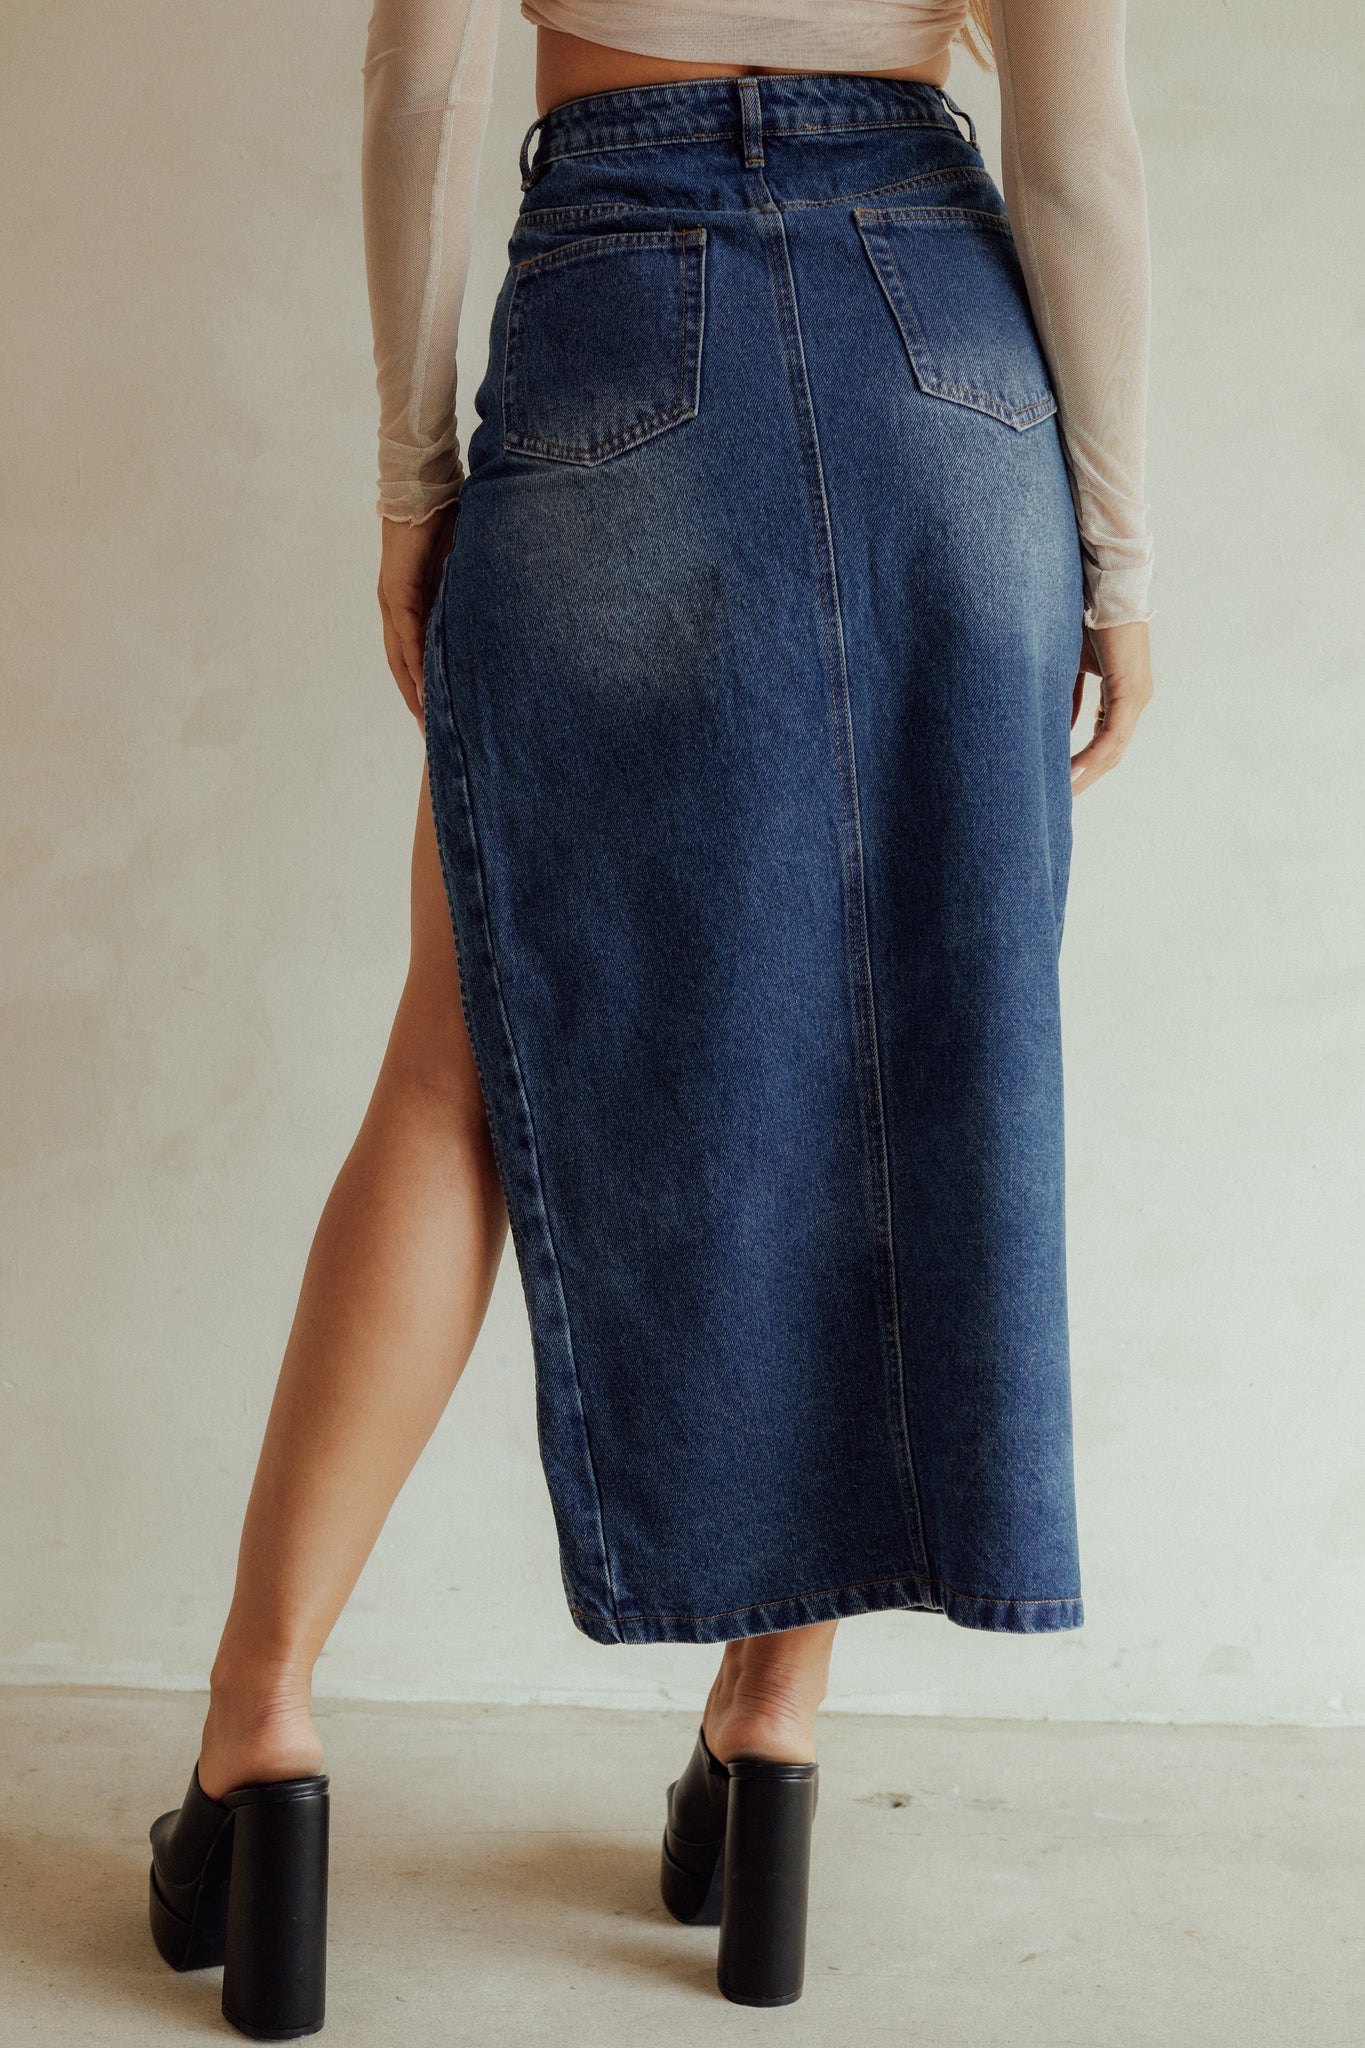 Denim skirt women's s design sense long skirt high waist thin slit a-line  skirt, Jeans Skirt, डेनिम स्कर्ट्स - Miss Merylin, Imphal